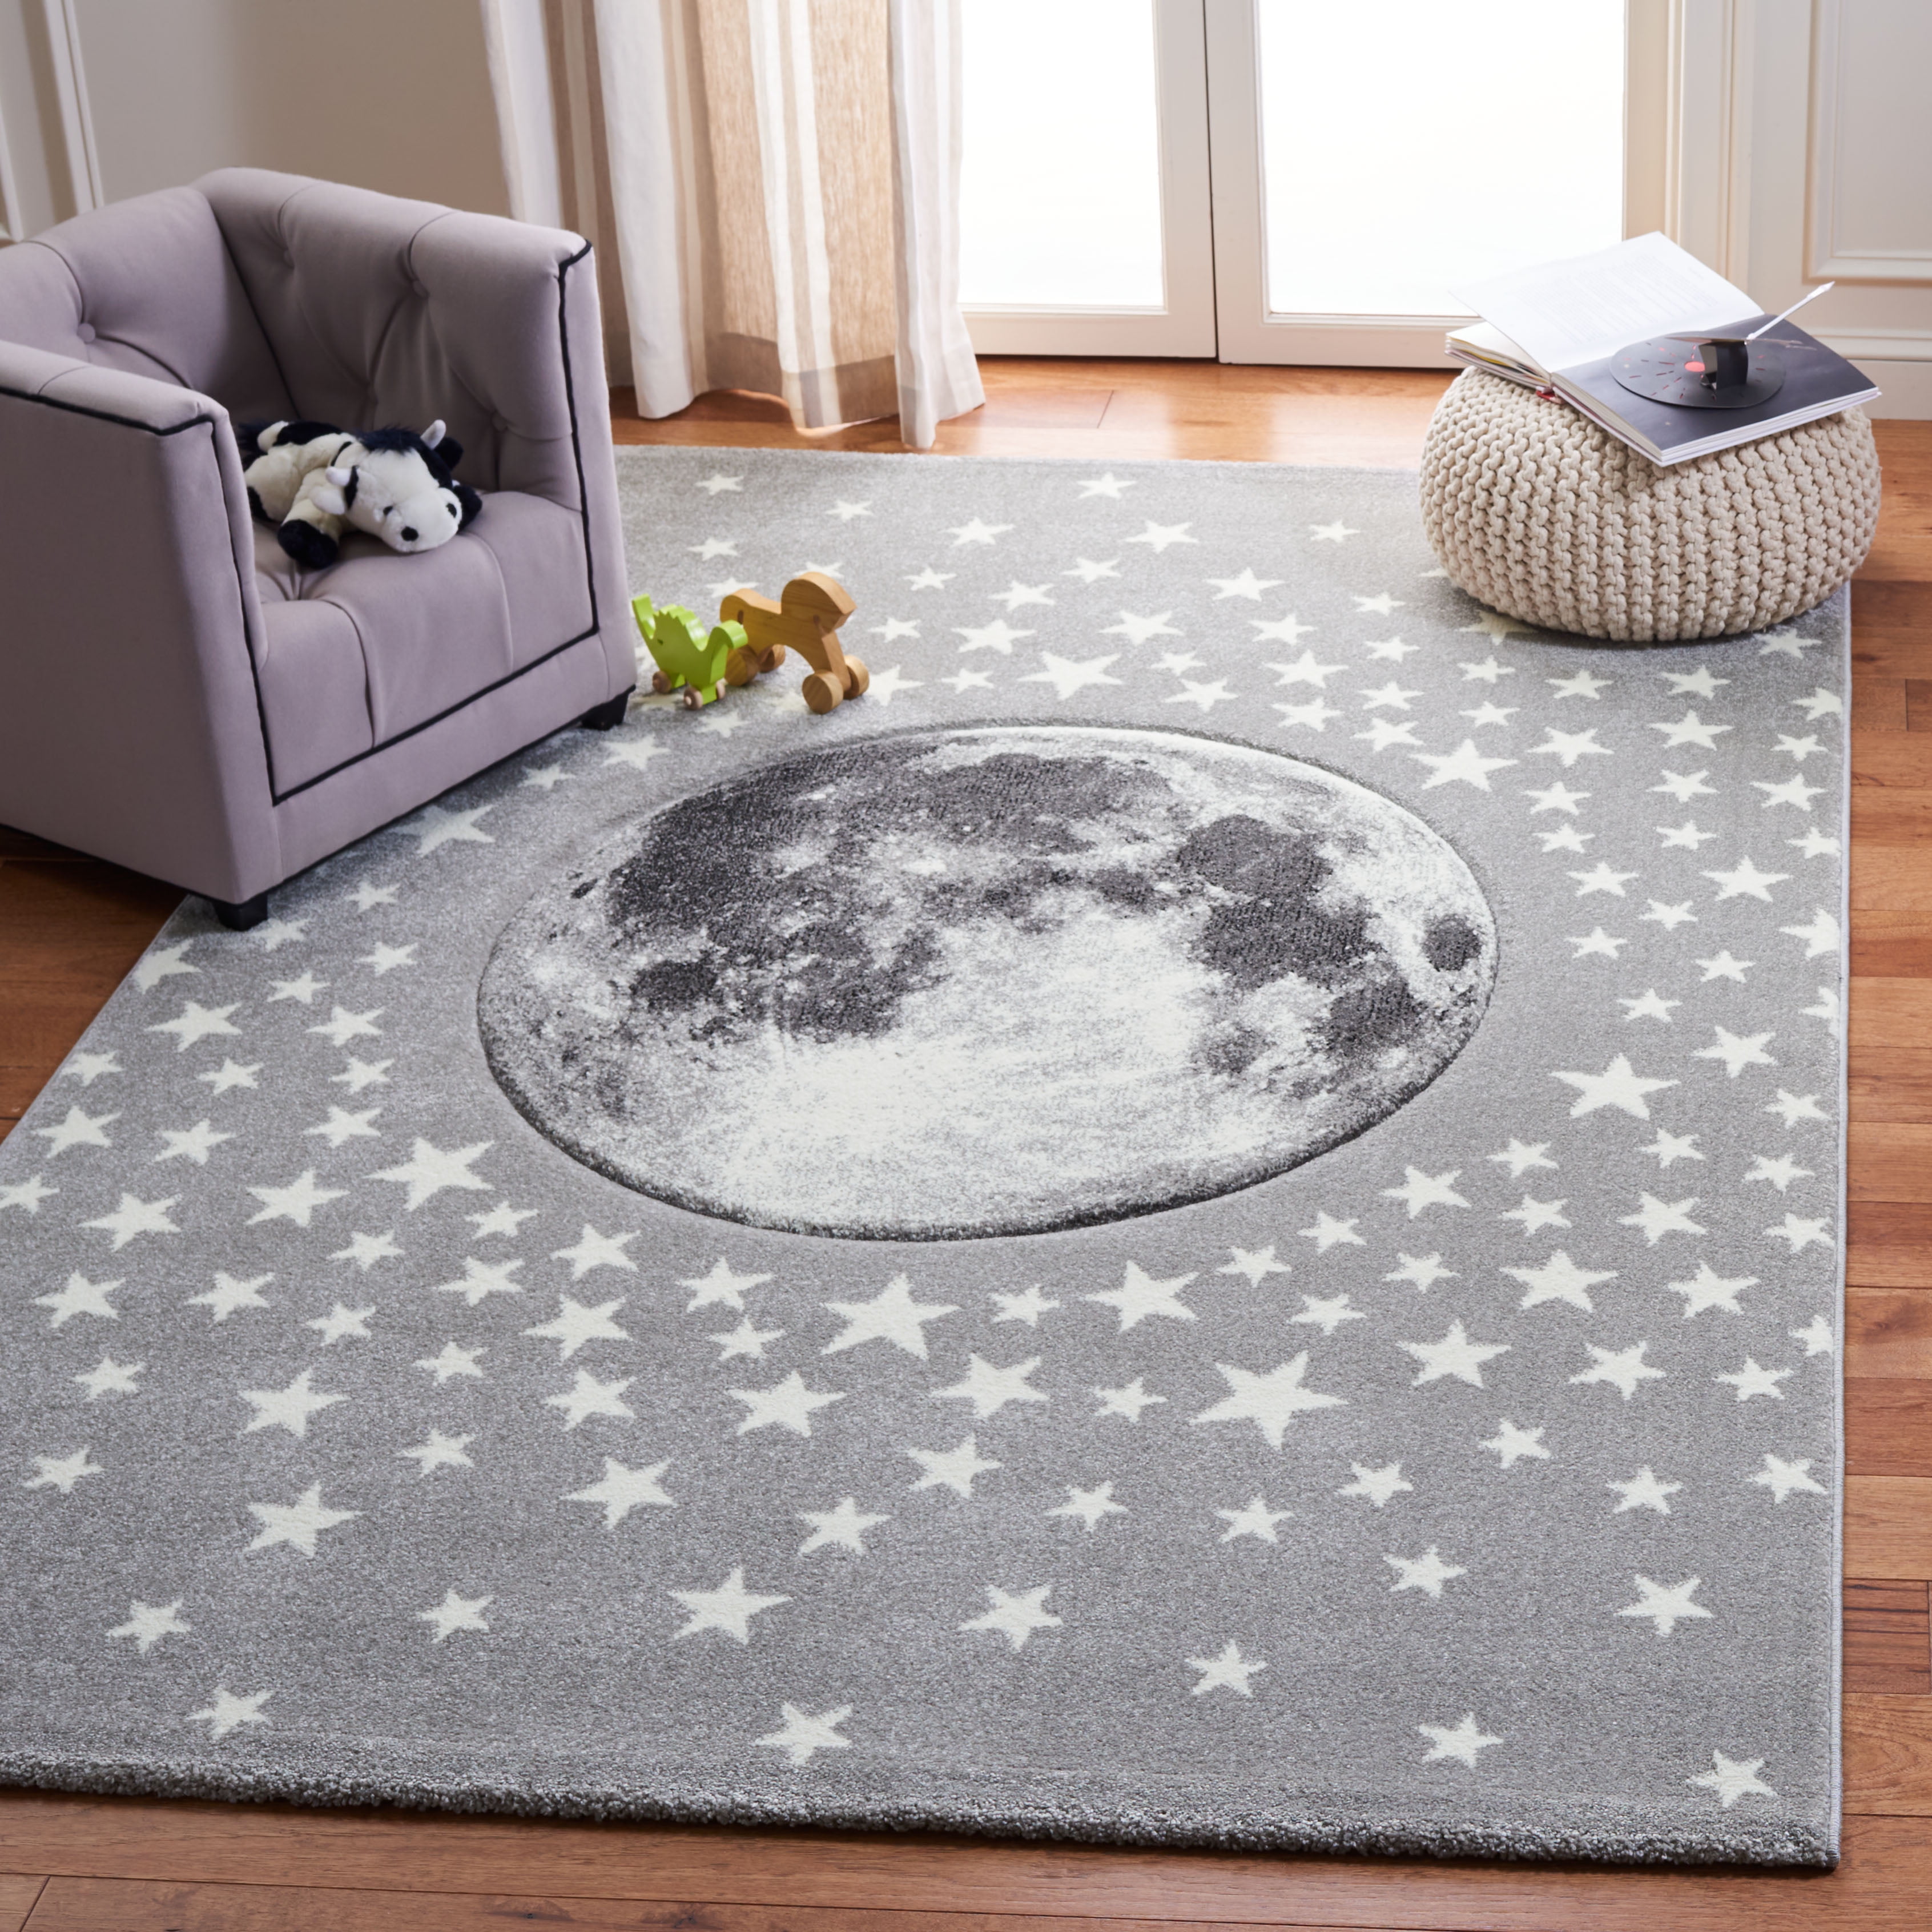 Abstract Moon Pattern Round Floor Mat Kids Bedroom Carpet Living Room Area Rugs 